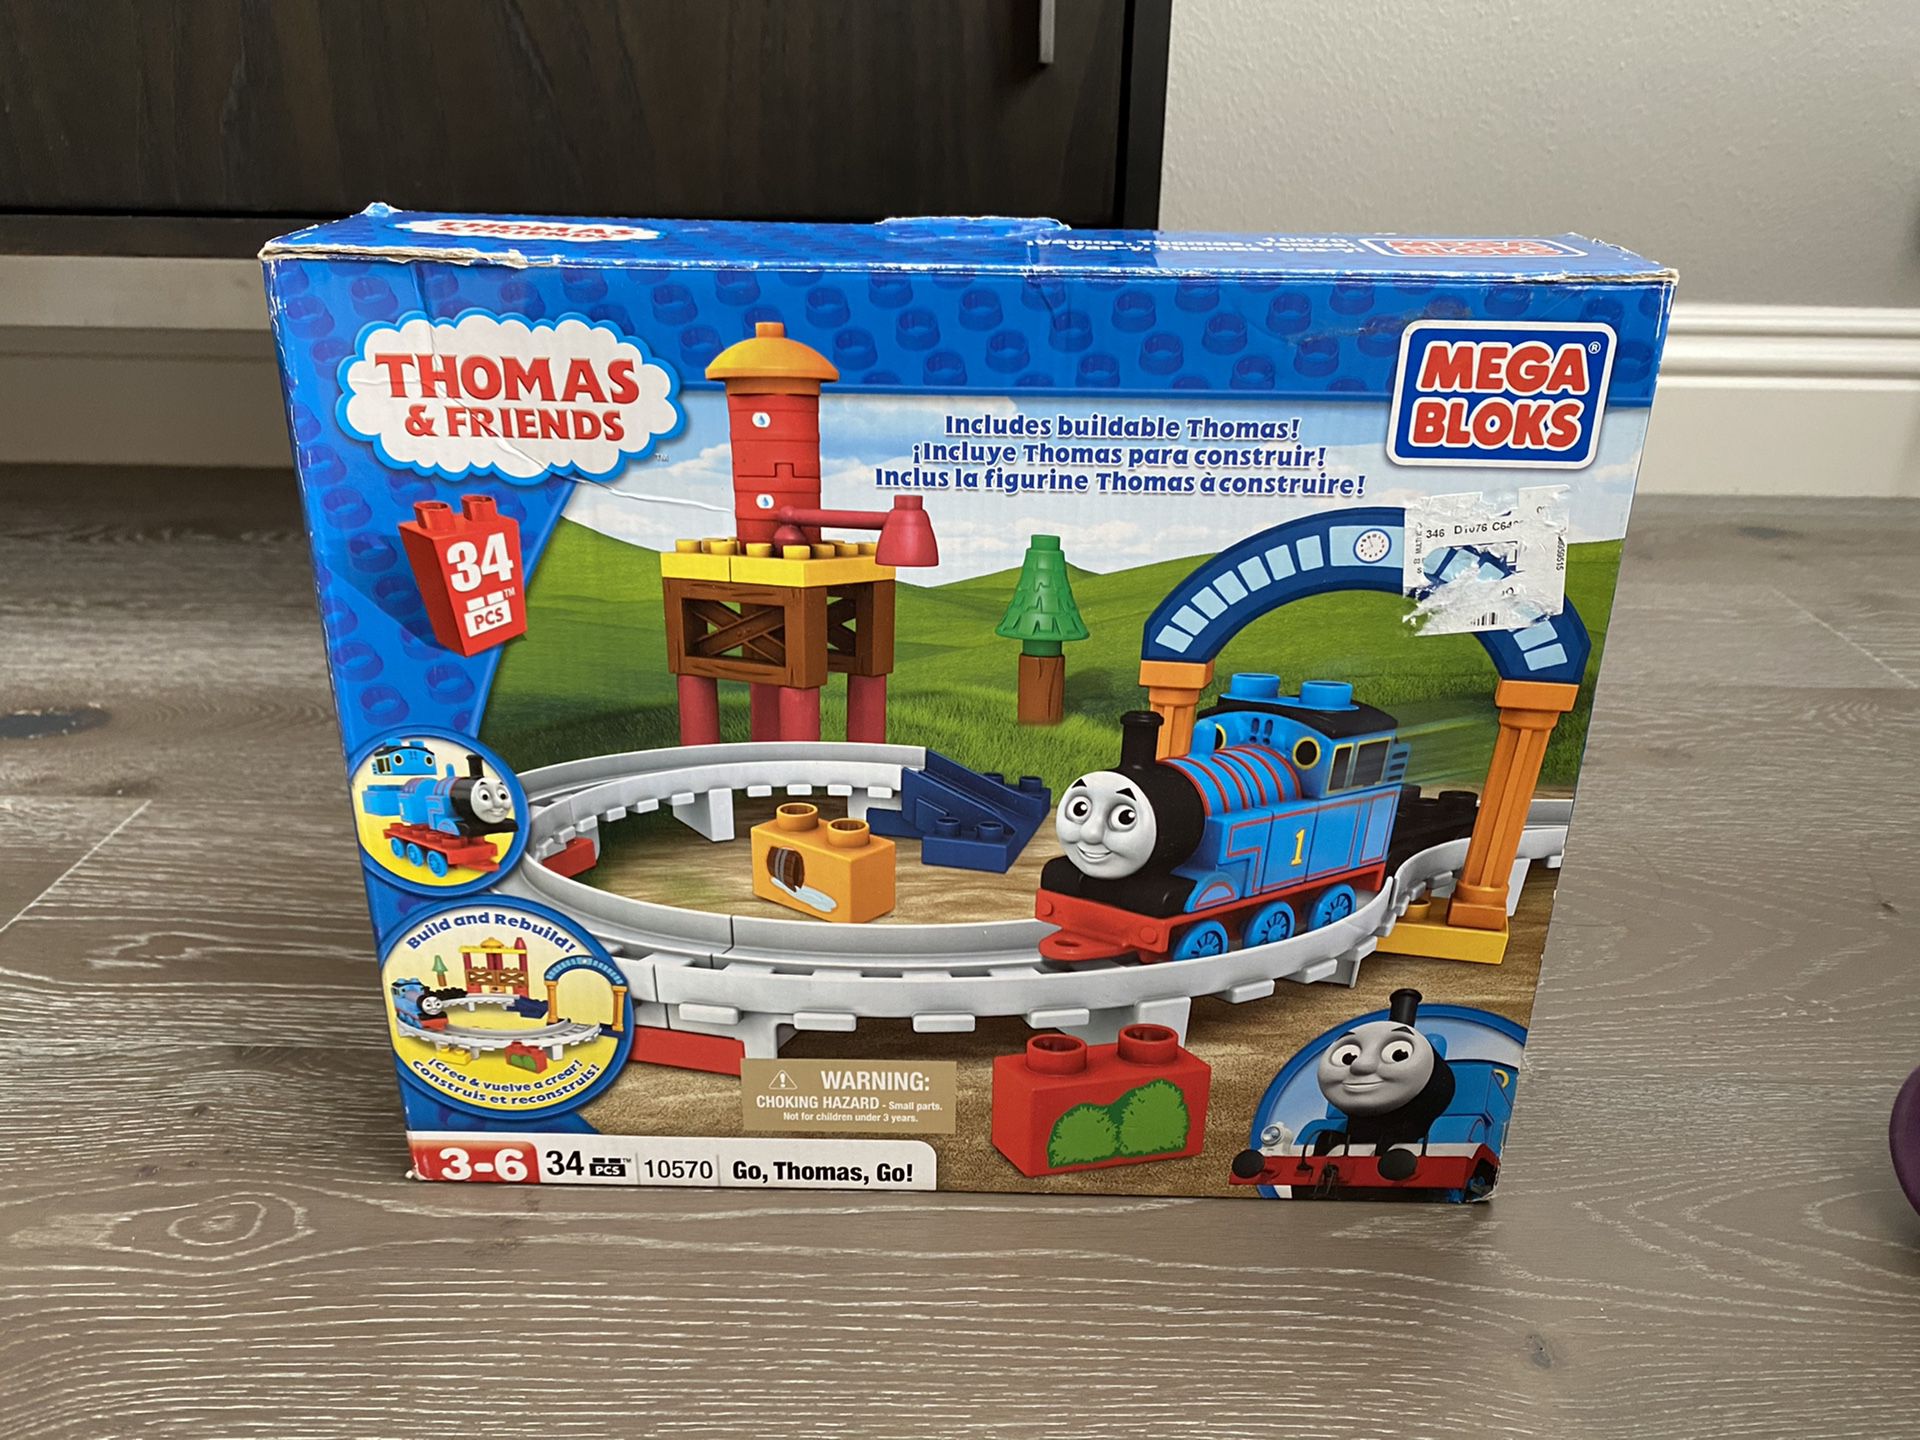 Mega Bloks Thomas & Friends train set